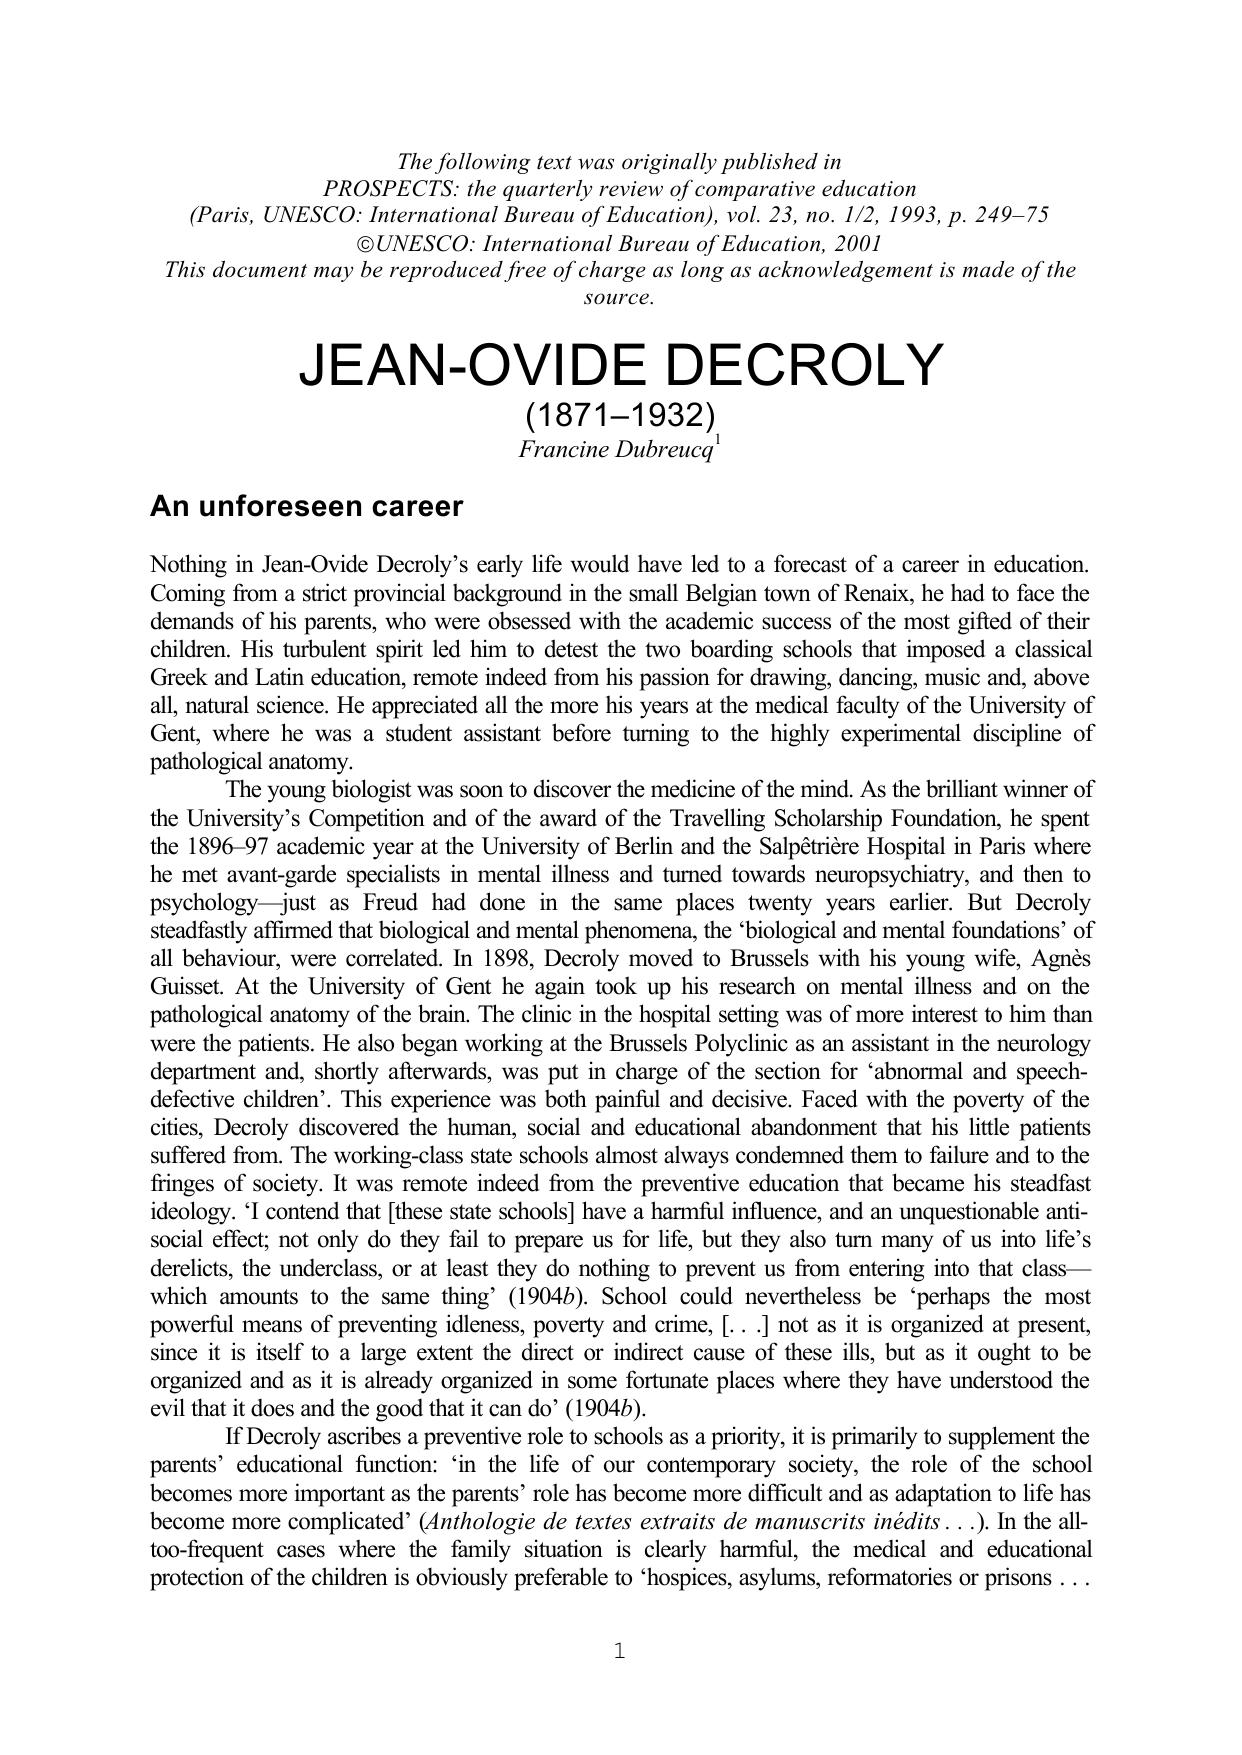 Jean- Ovide Decroly